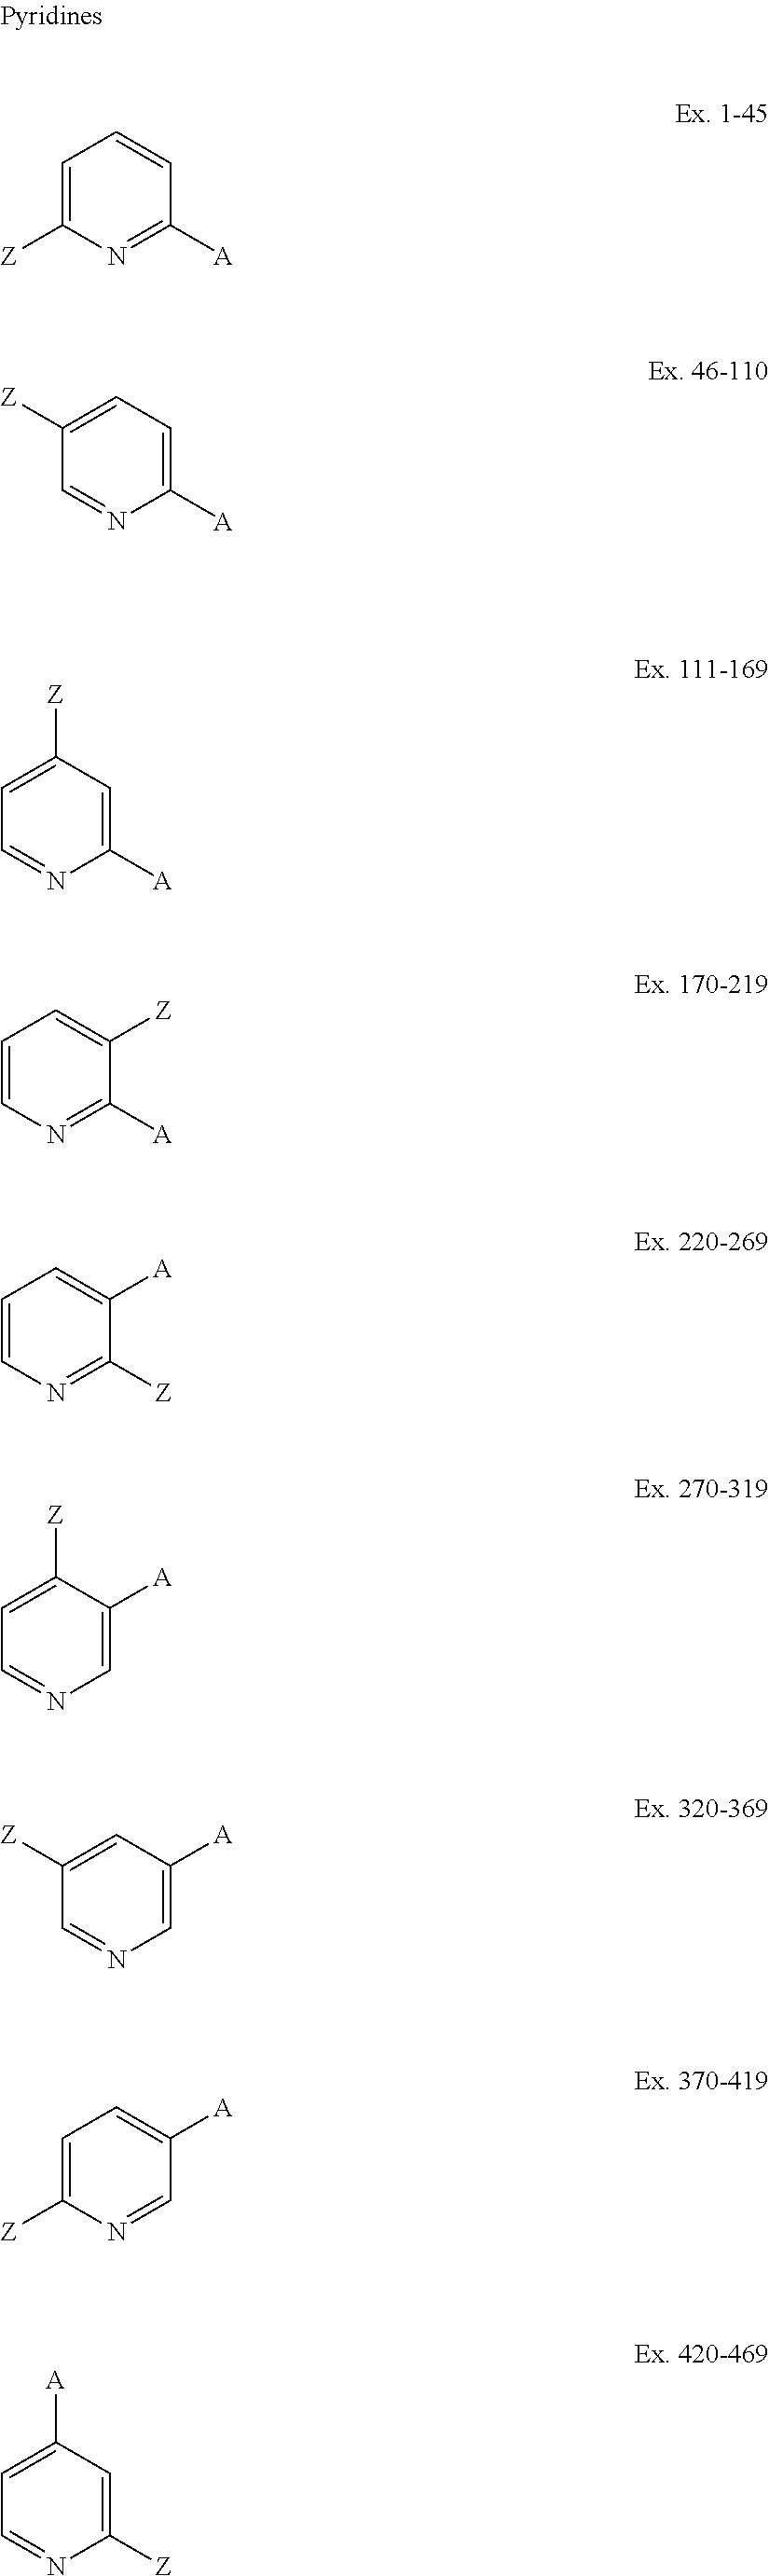 Fluoroalkyl-substituted derivatives of pyridine, pyrimidine, and pyrazine